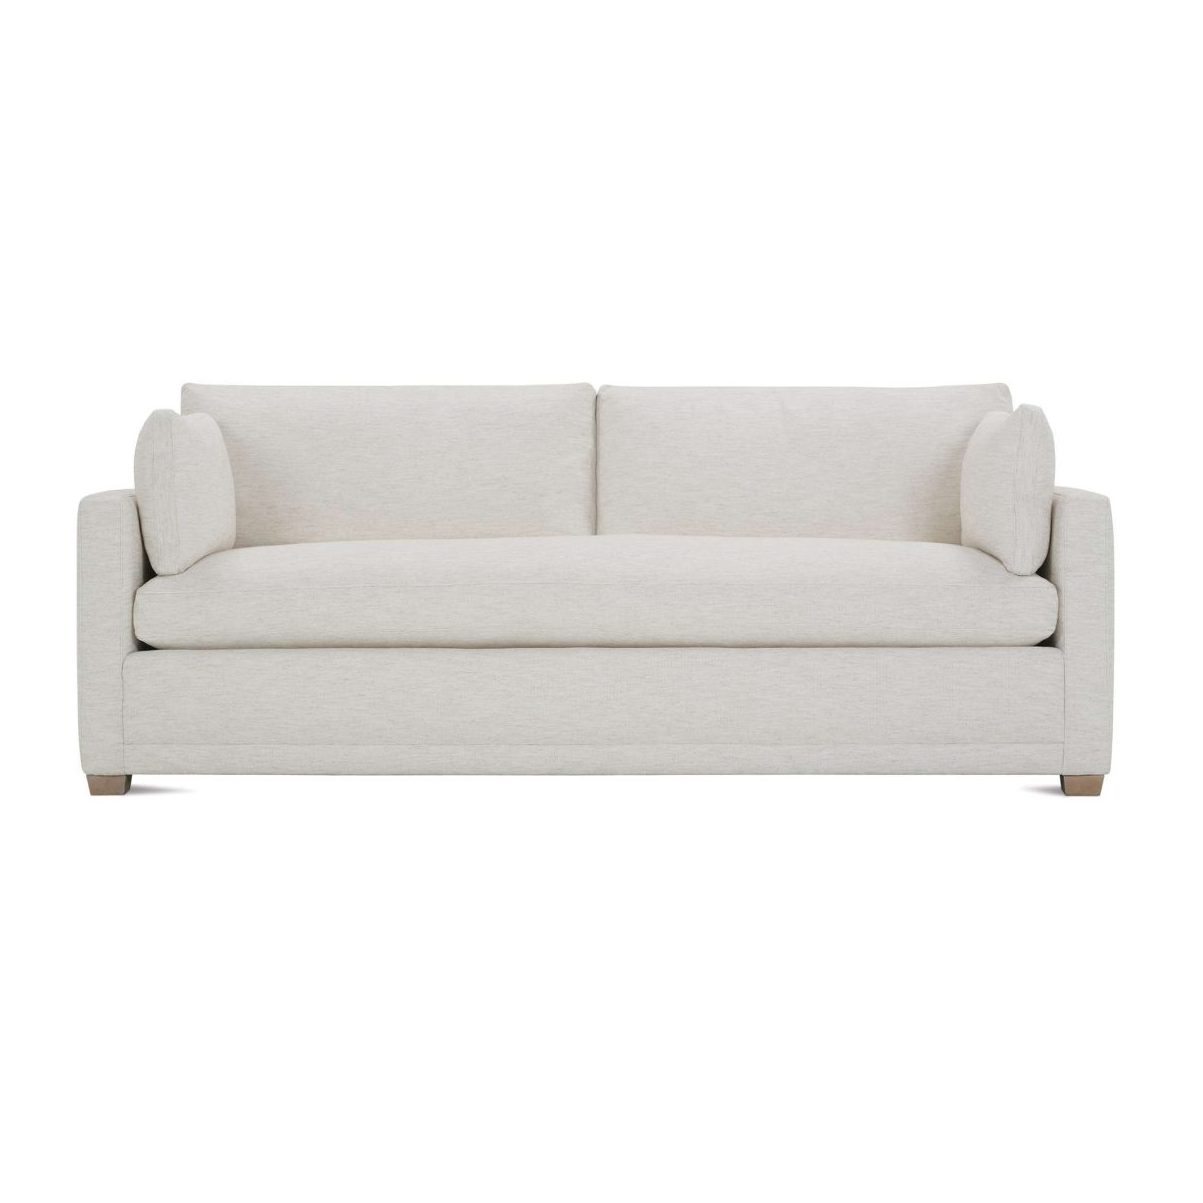 SYLVIE BENCH SEAT SOFA - Hedi's Furniture